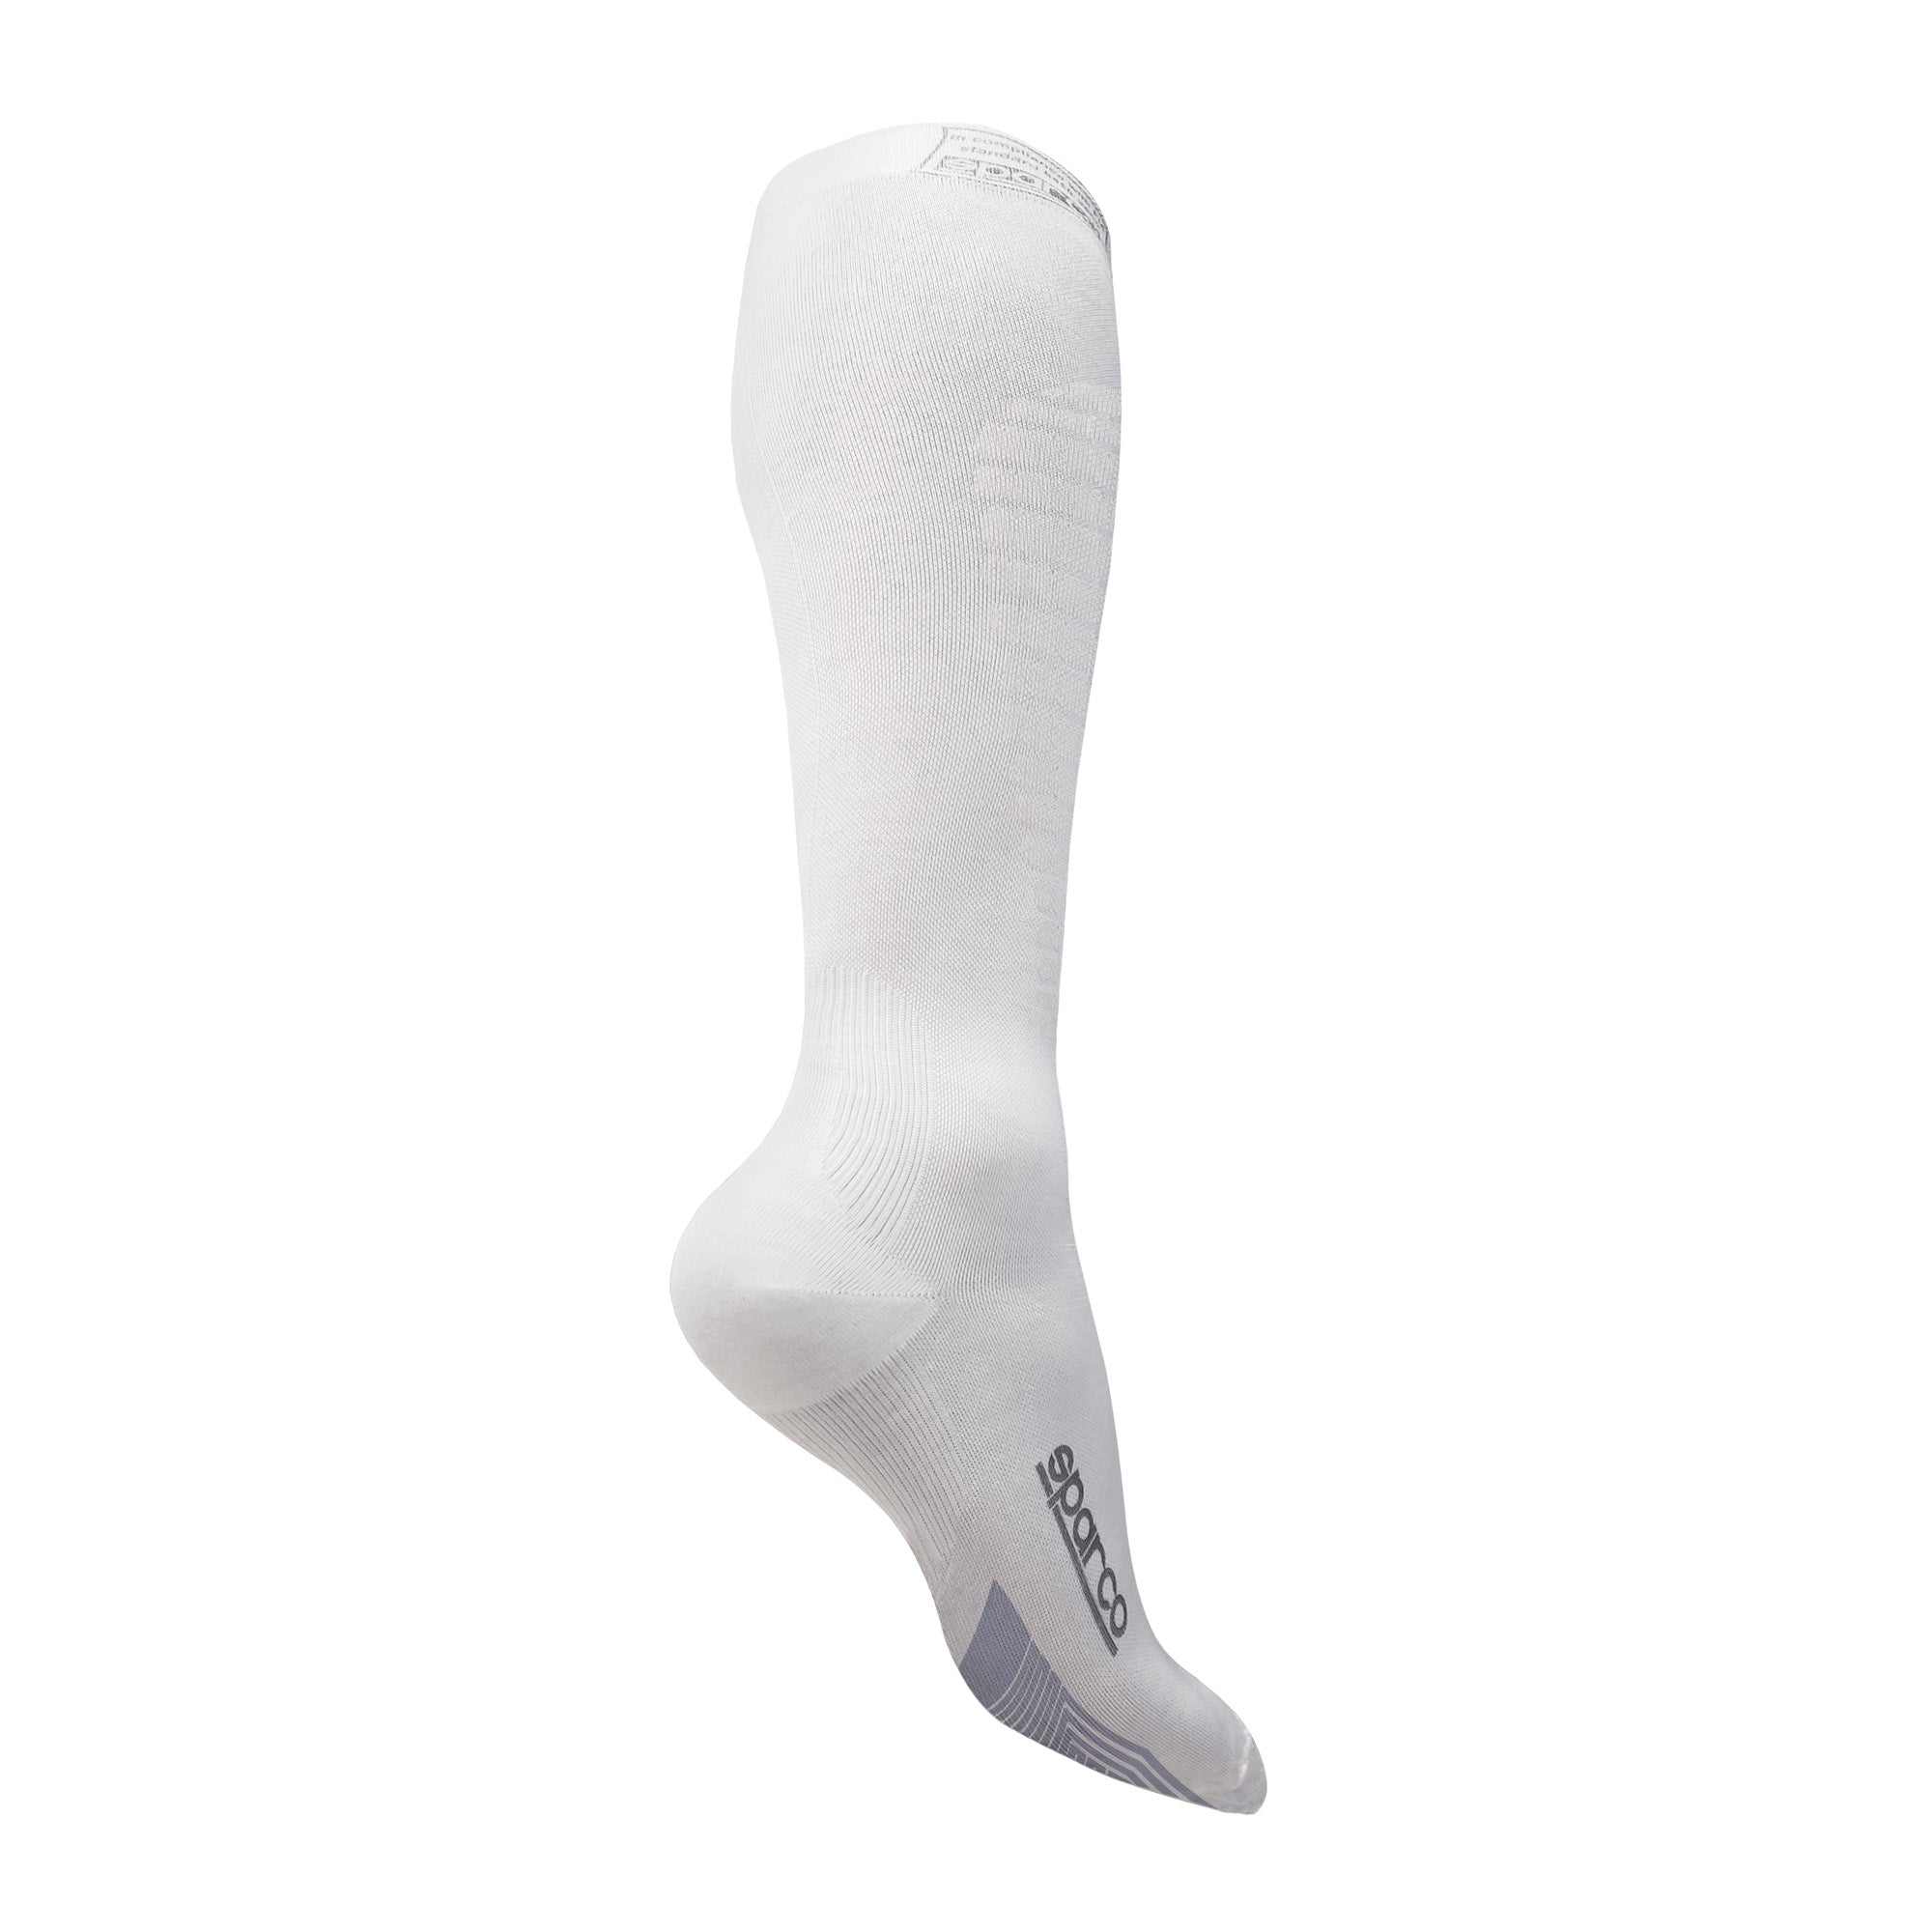 Sparco Compression Socks - Silcone Inside